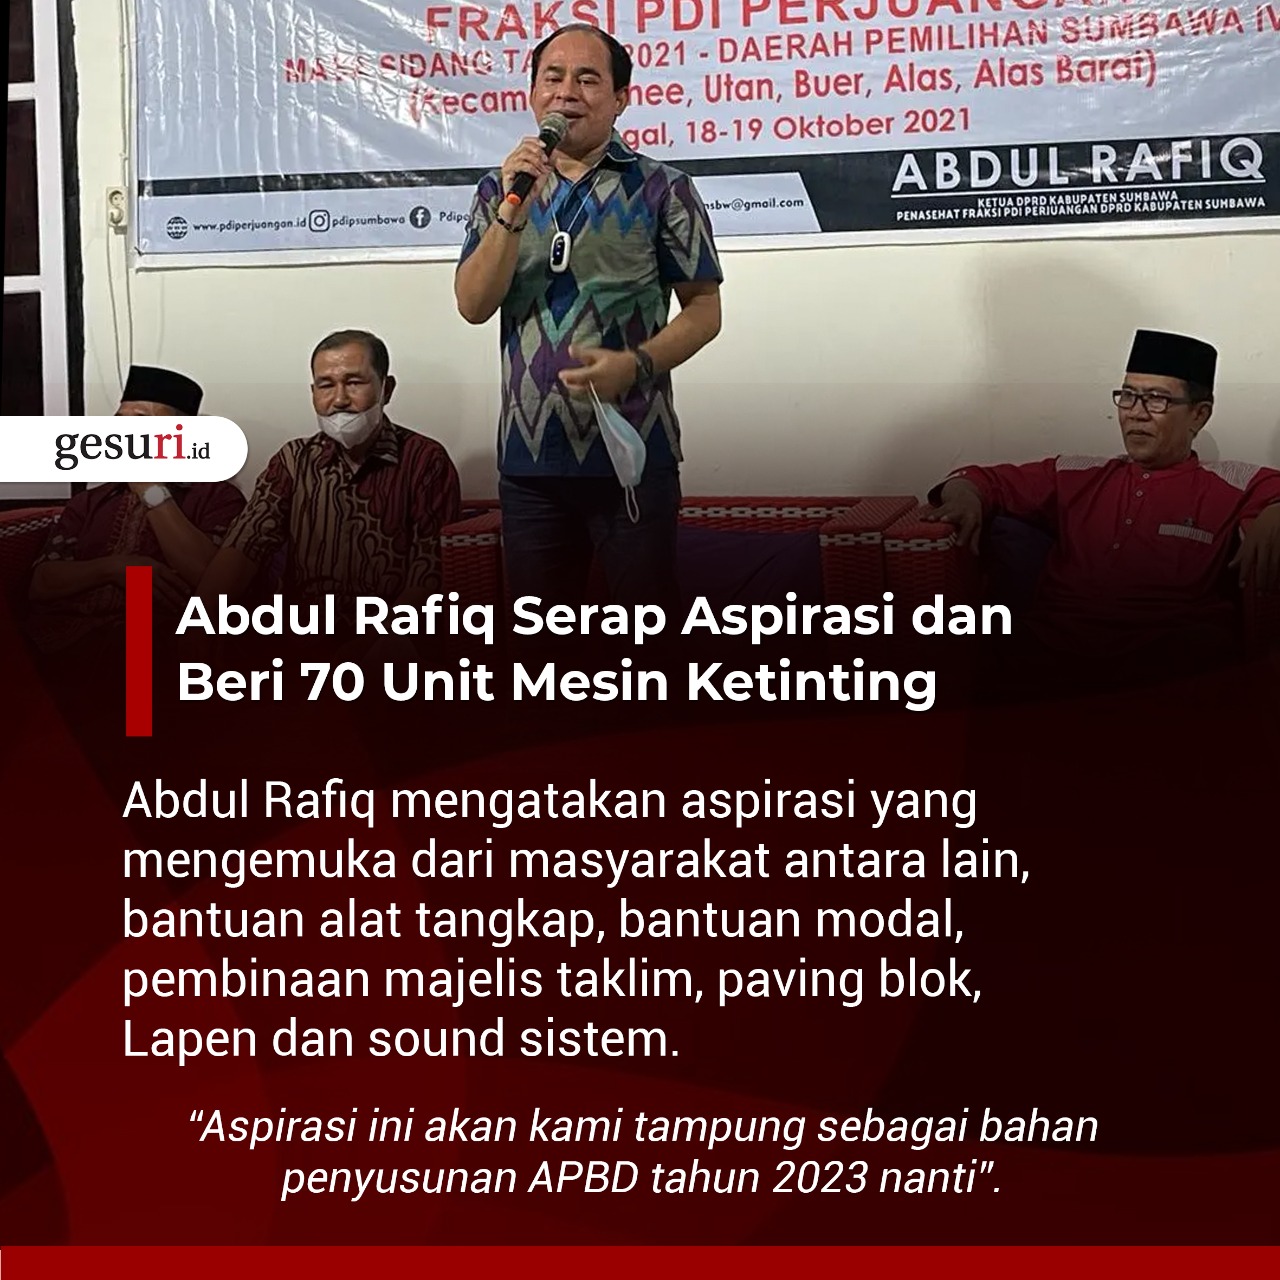 Abdul Rafiq Serap Aspirasi dan Beri Mesin Ketinting (2/2)